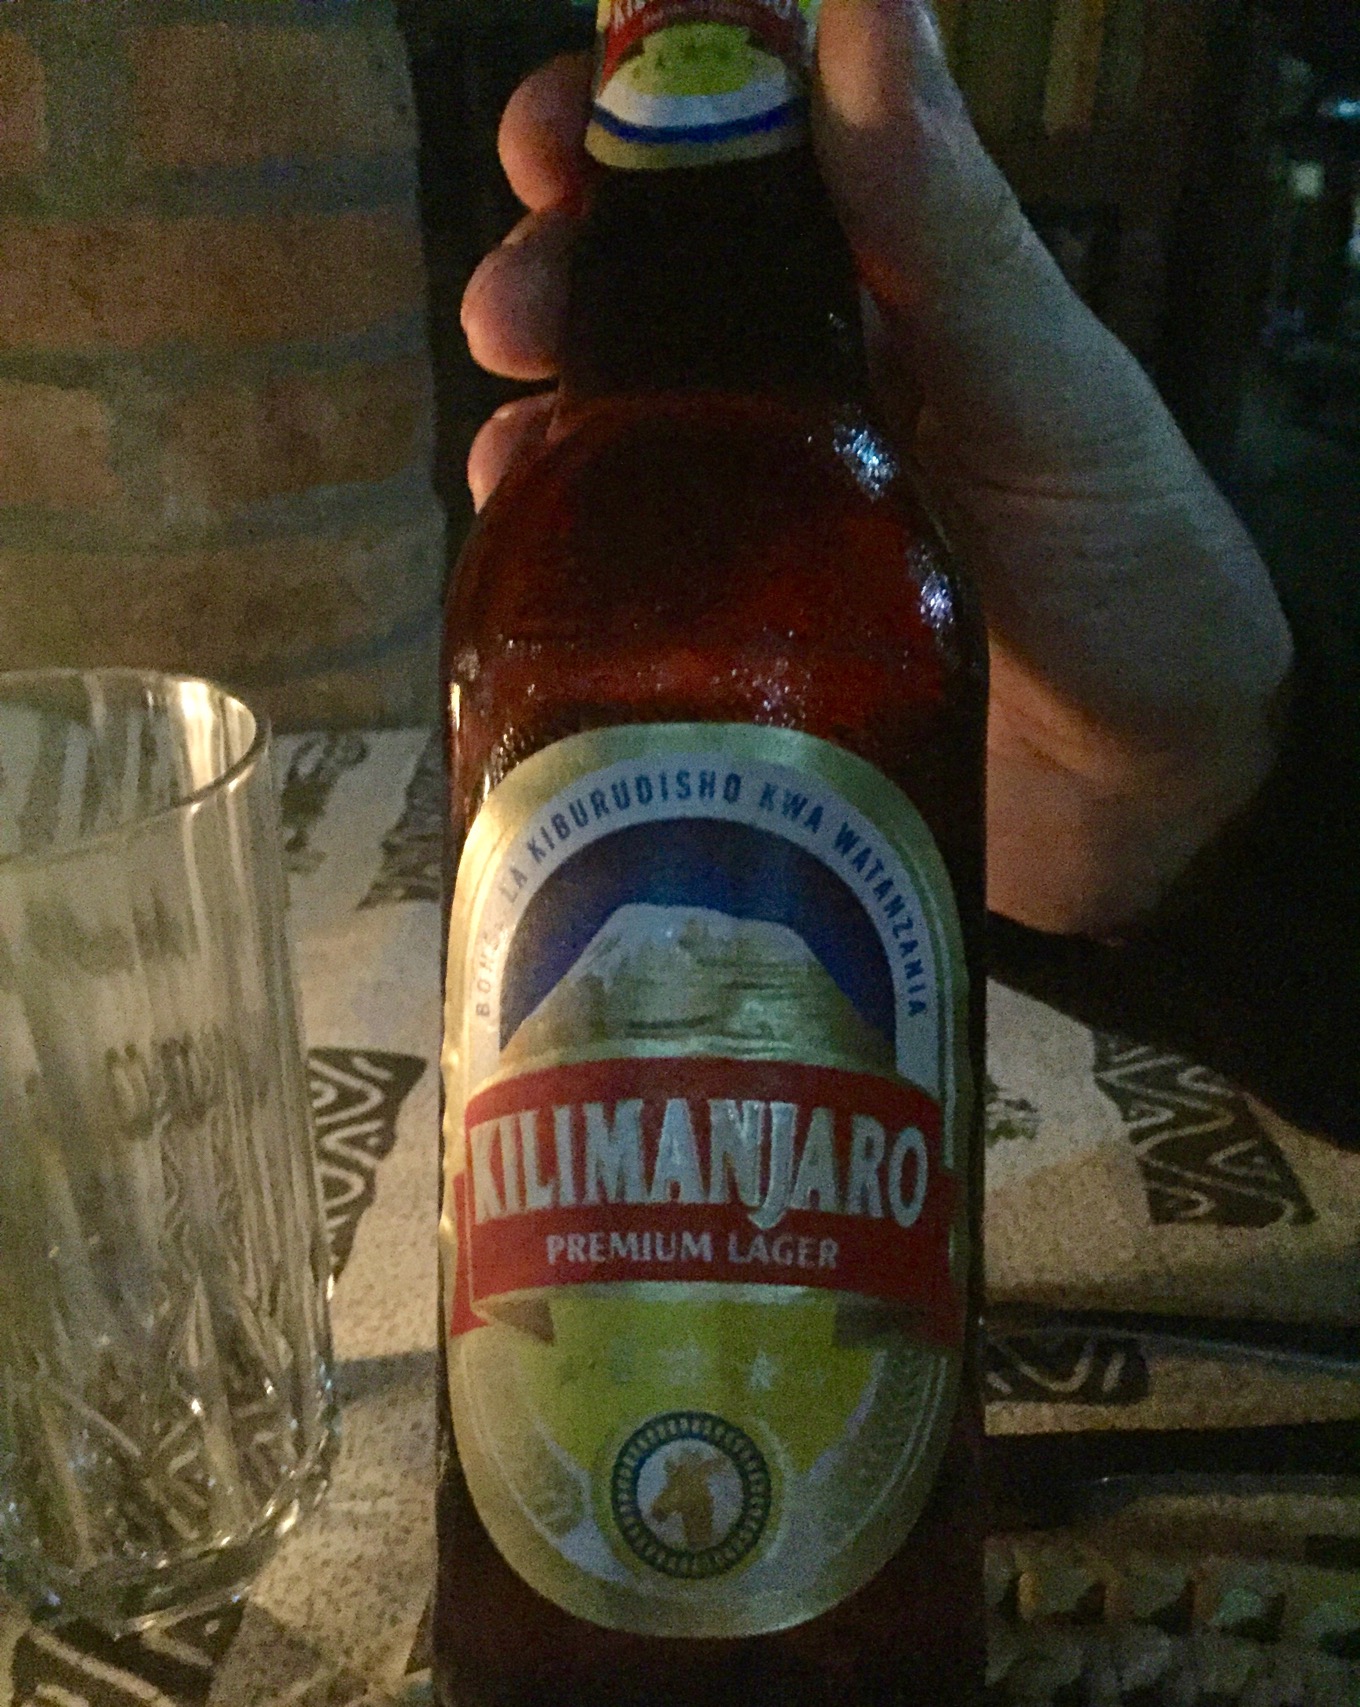 Kilimanjaro beer for dinner at Ambureni Coffee Lodge